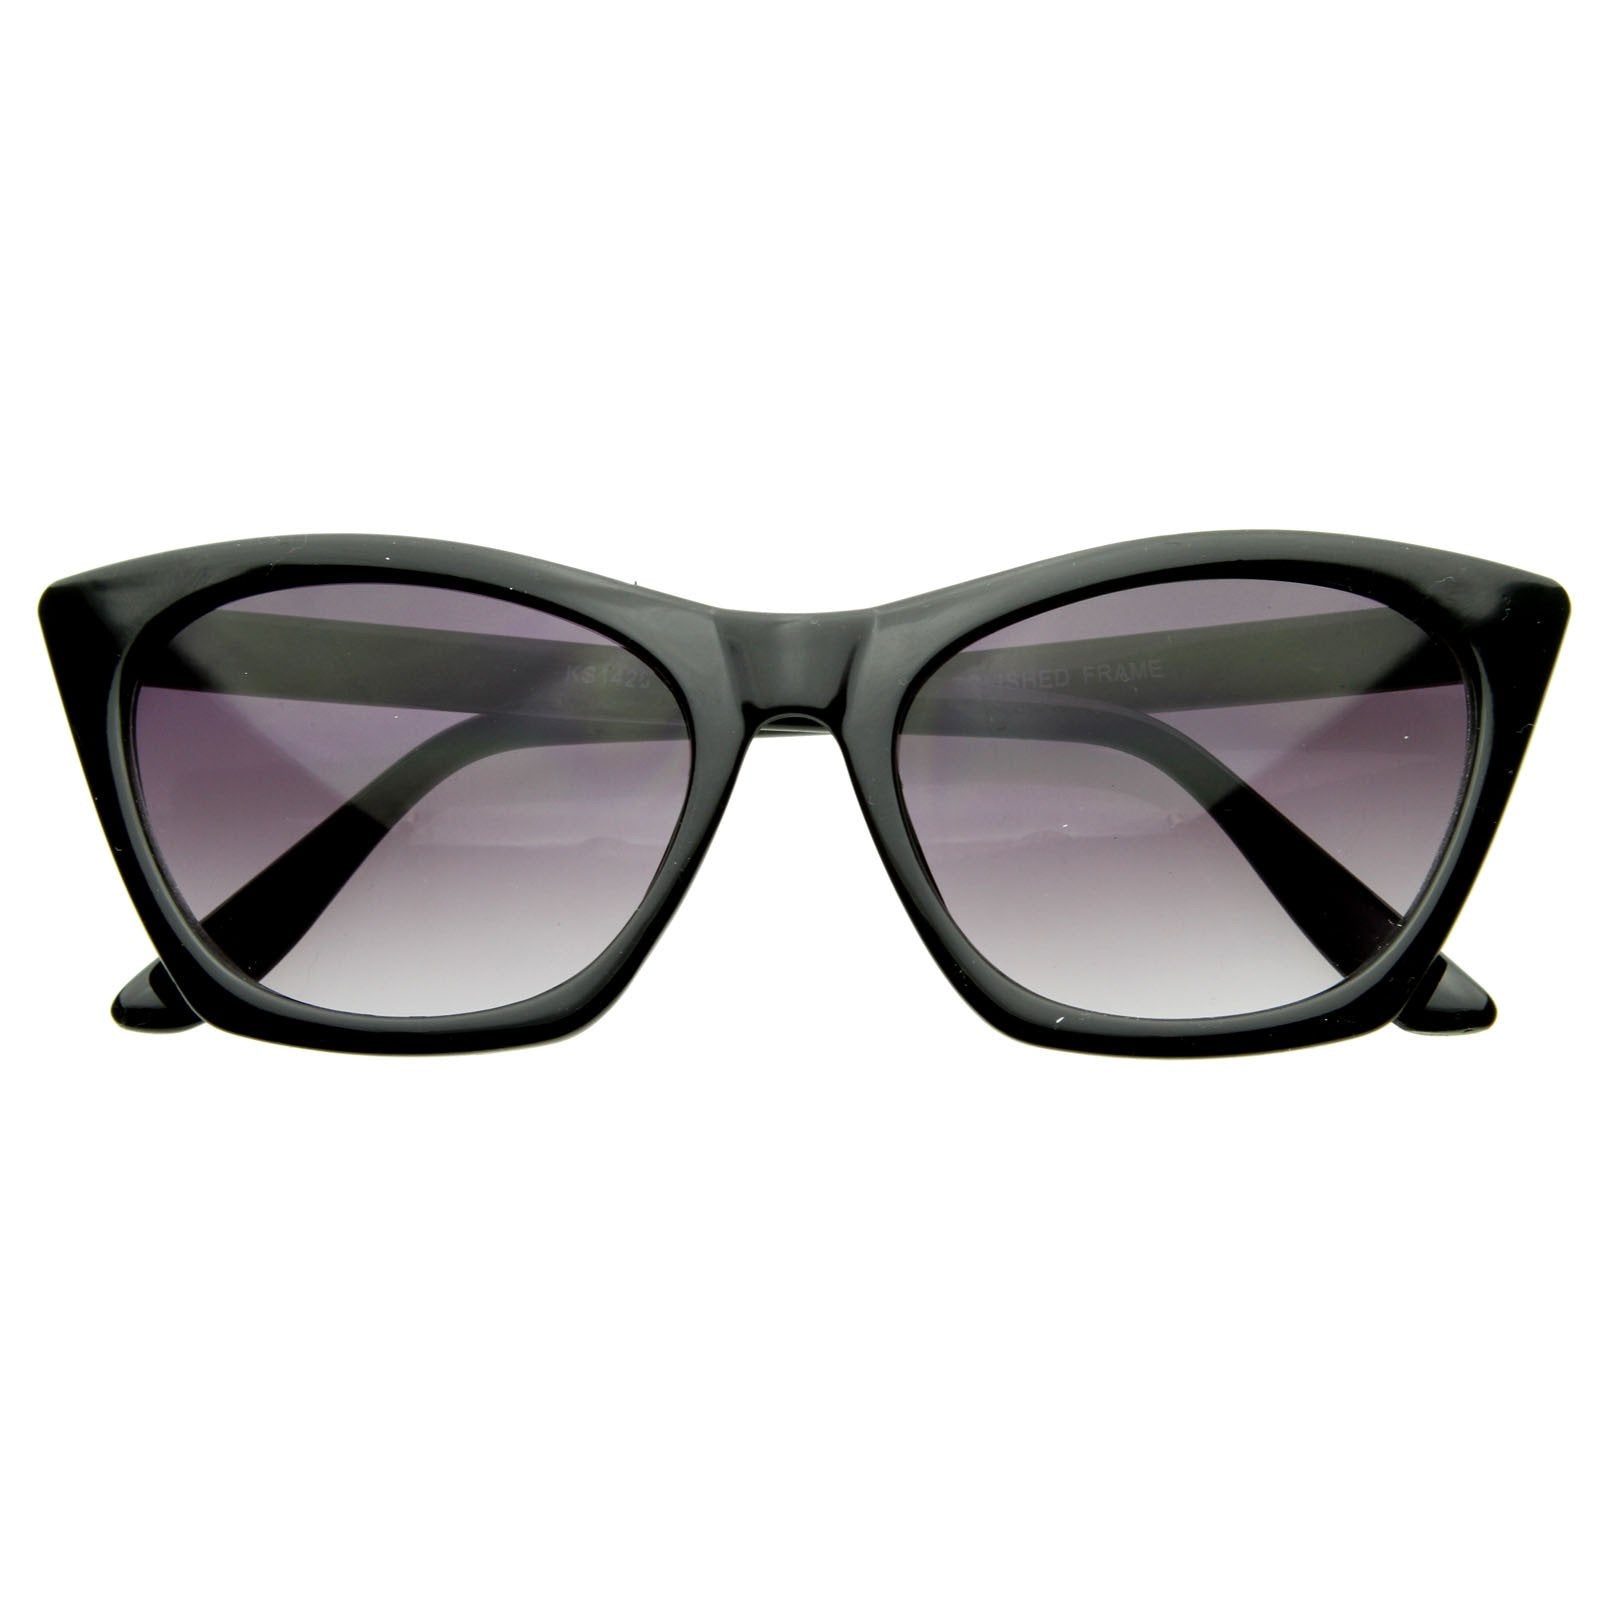 zeroUV - Super Cat Eye Glasses Vintage Inspired Mod Fashion Clear Lens Eyewear (Black)